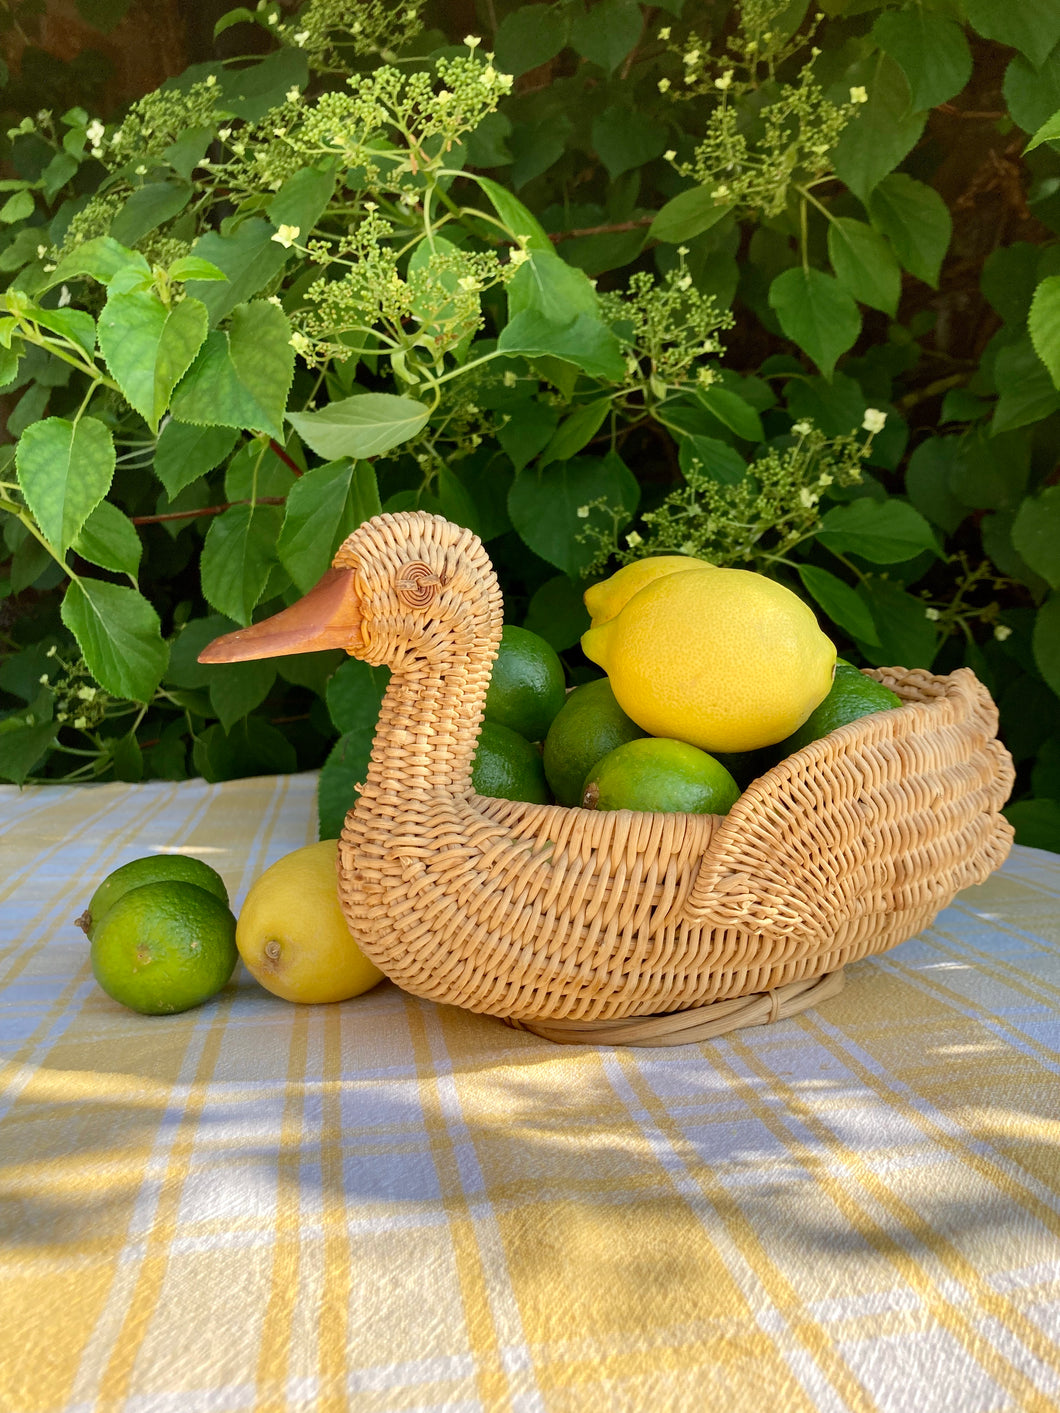 Duck bread/fruit wicker basket for summer dining